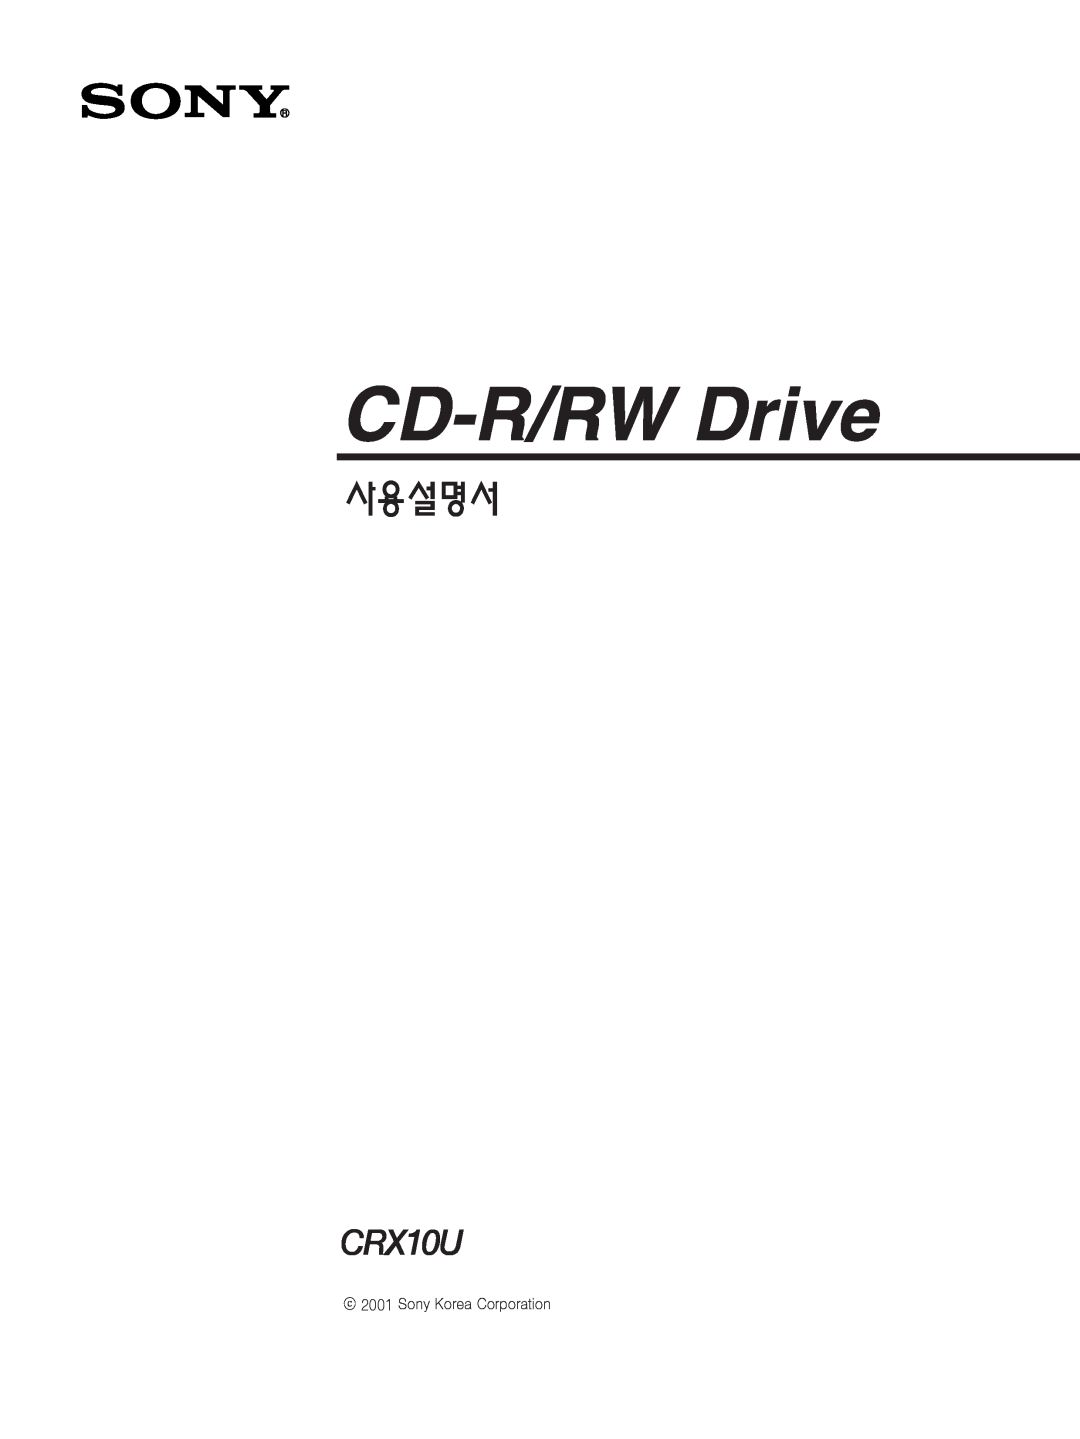 Sony CRX10U manual CD-R/RWDrive 